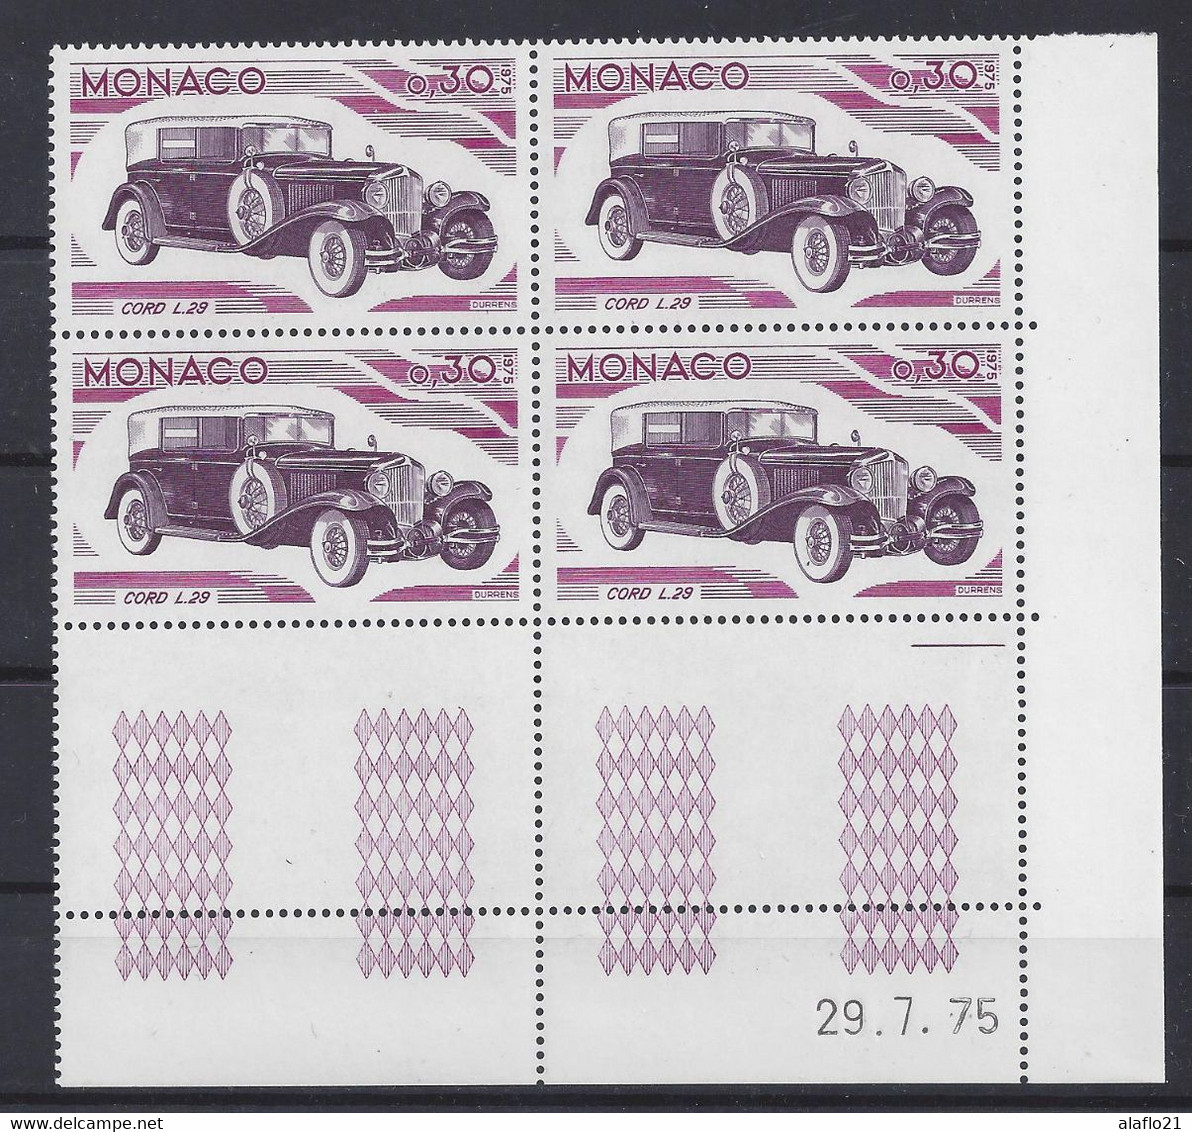 MONACO - N° 1021 - CORD L29 - Bloc De 4 COIN DATE - NEUF SANS CHARNIERE - 29/7/75 - Unused Stamps